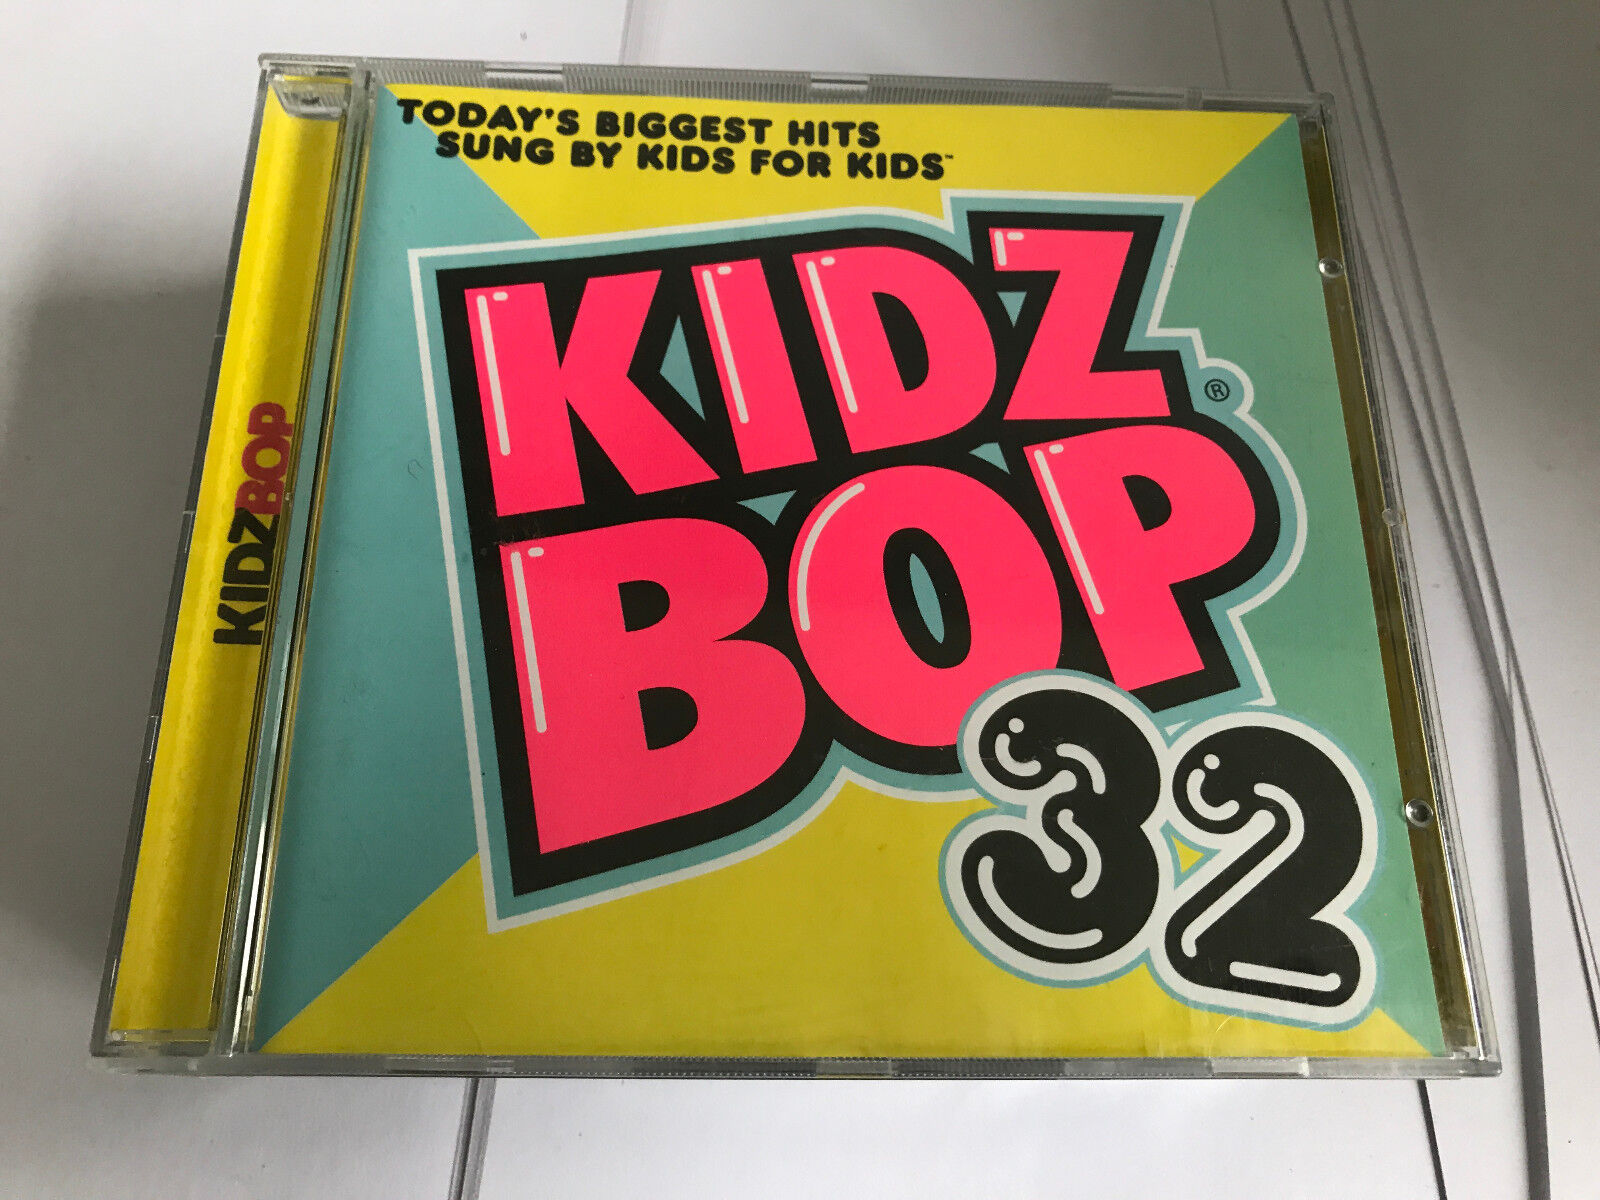 Kidz Bop 32 CD 2016 by KIDZ BOP Kids MINT/EX 888072002326